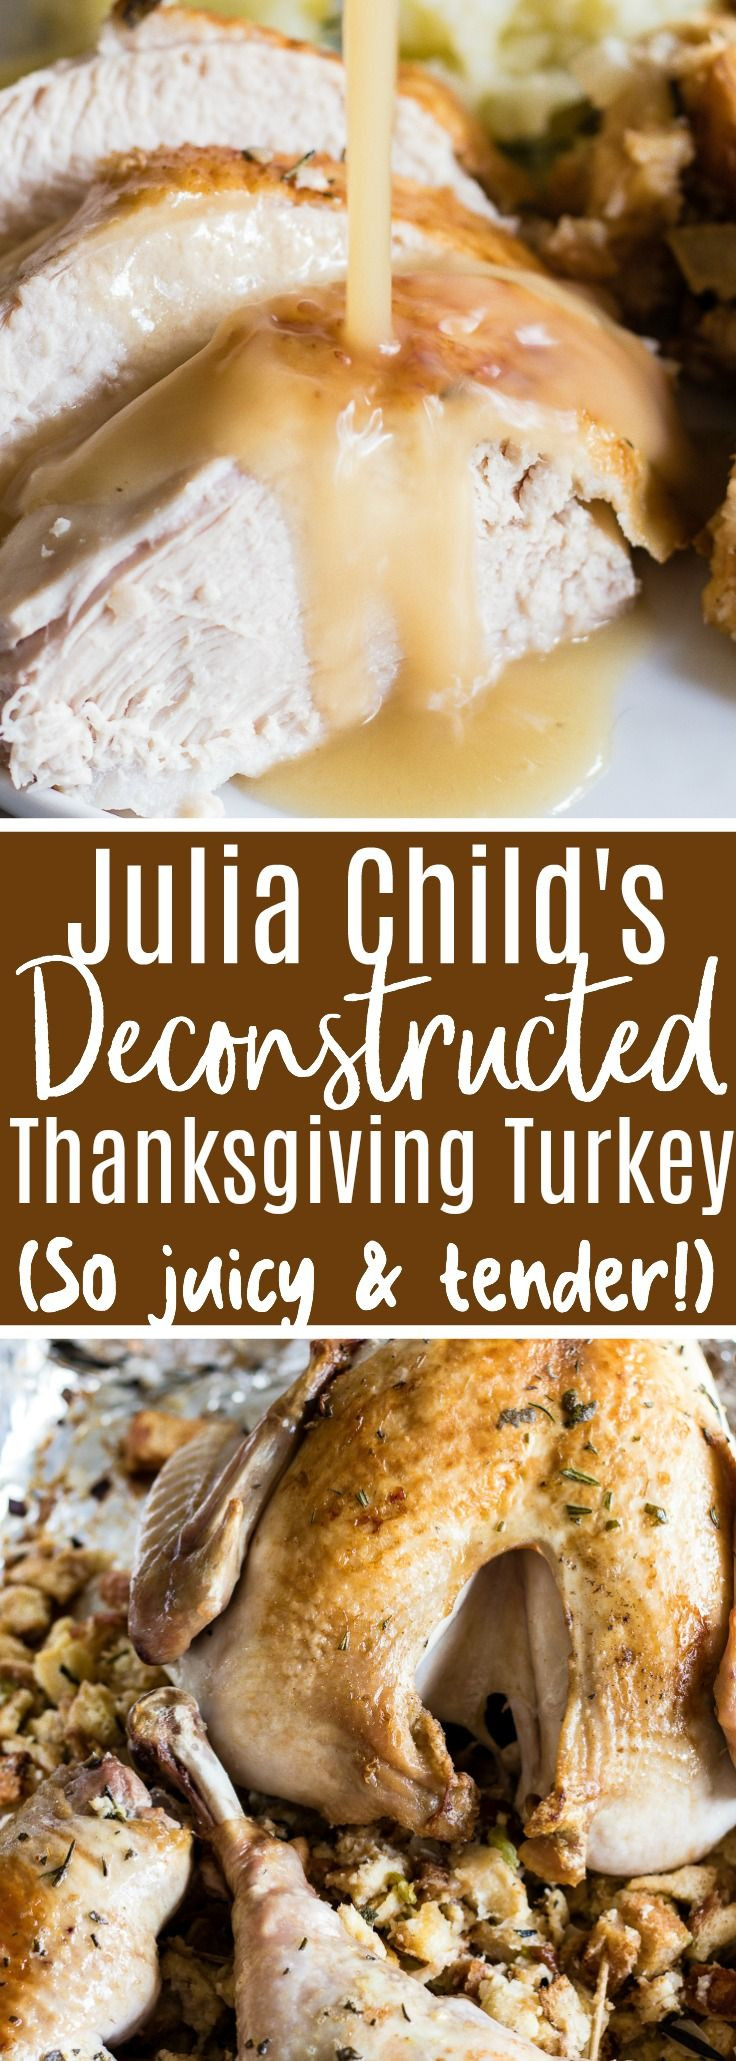 Julia Child Thanksgiving Turkey
 Best 25 Julia childs ideas on Pinterest